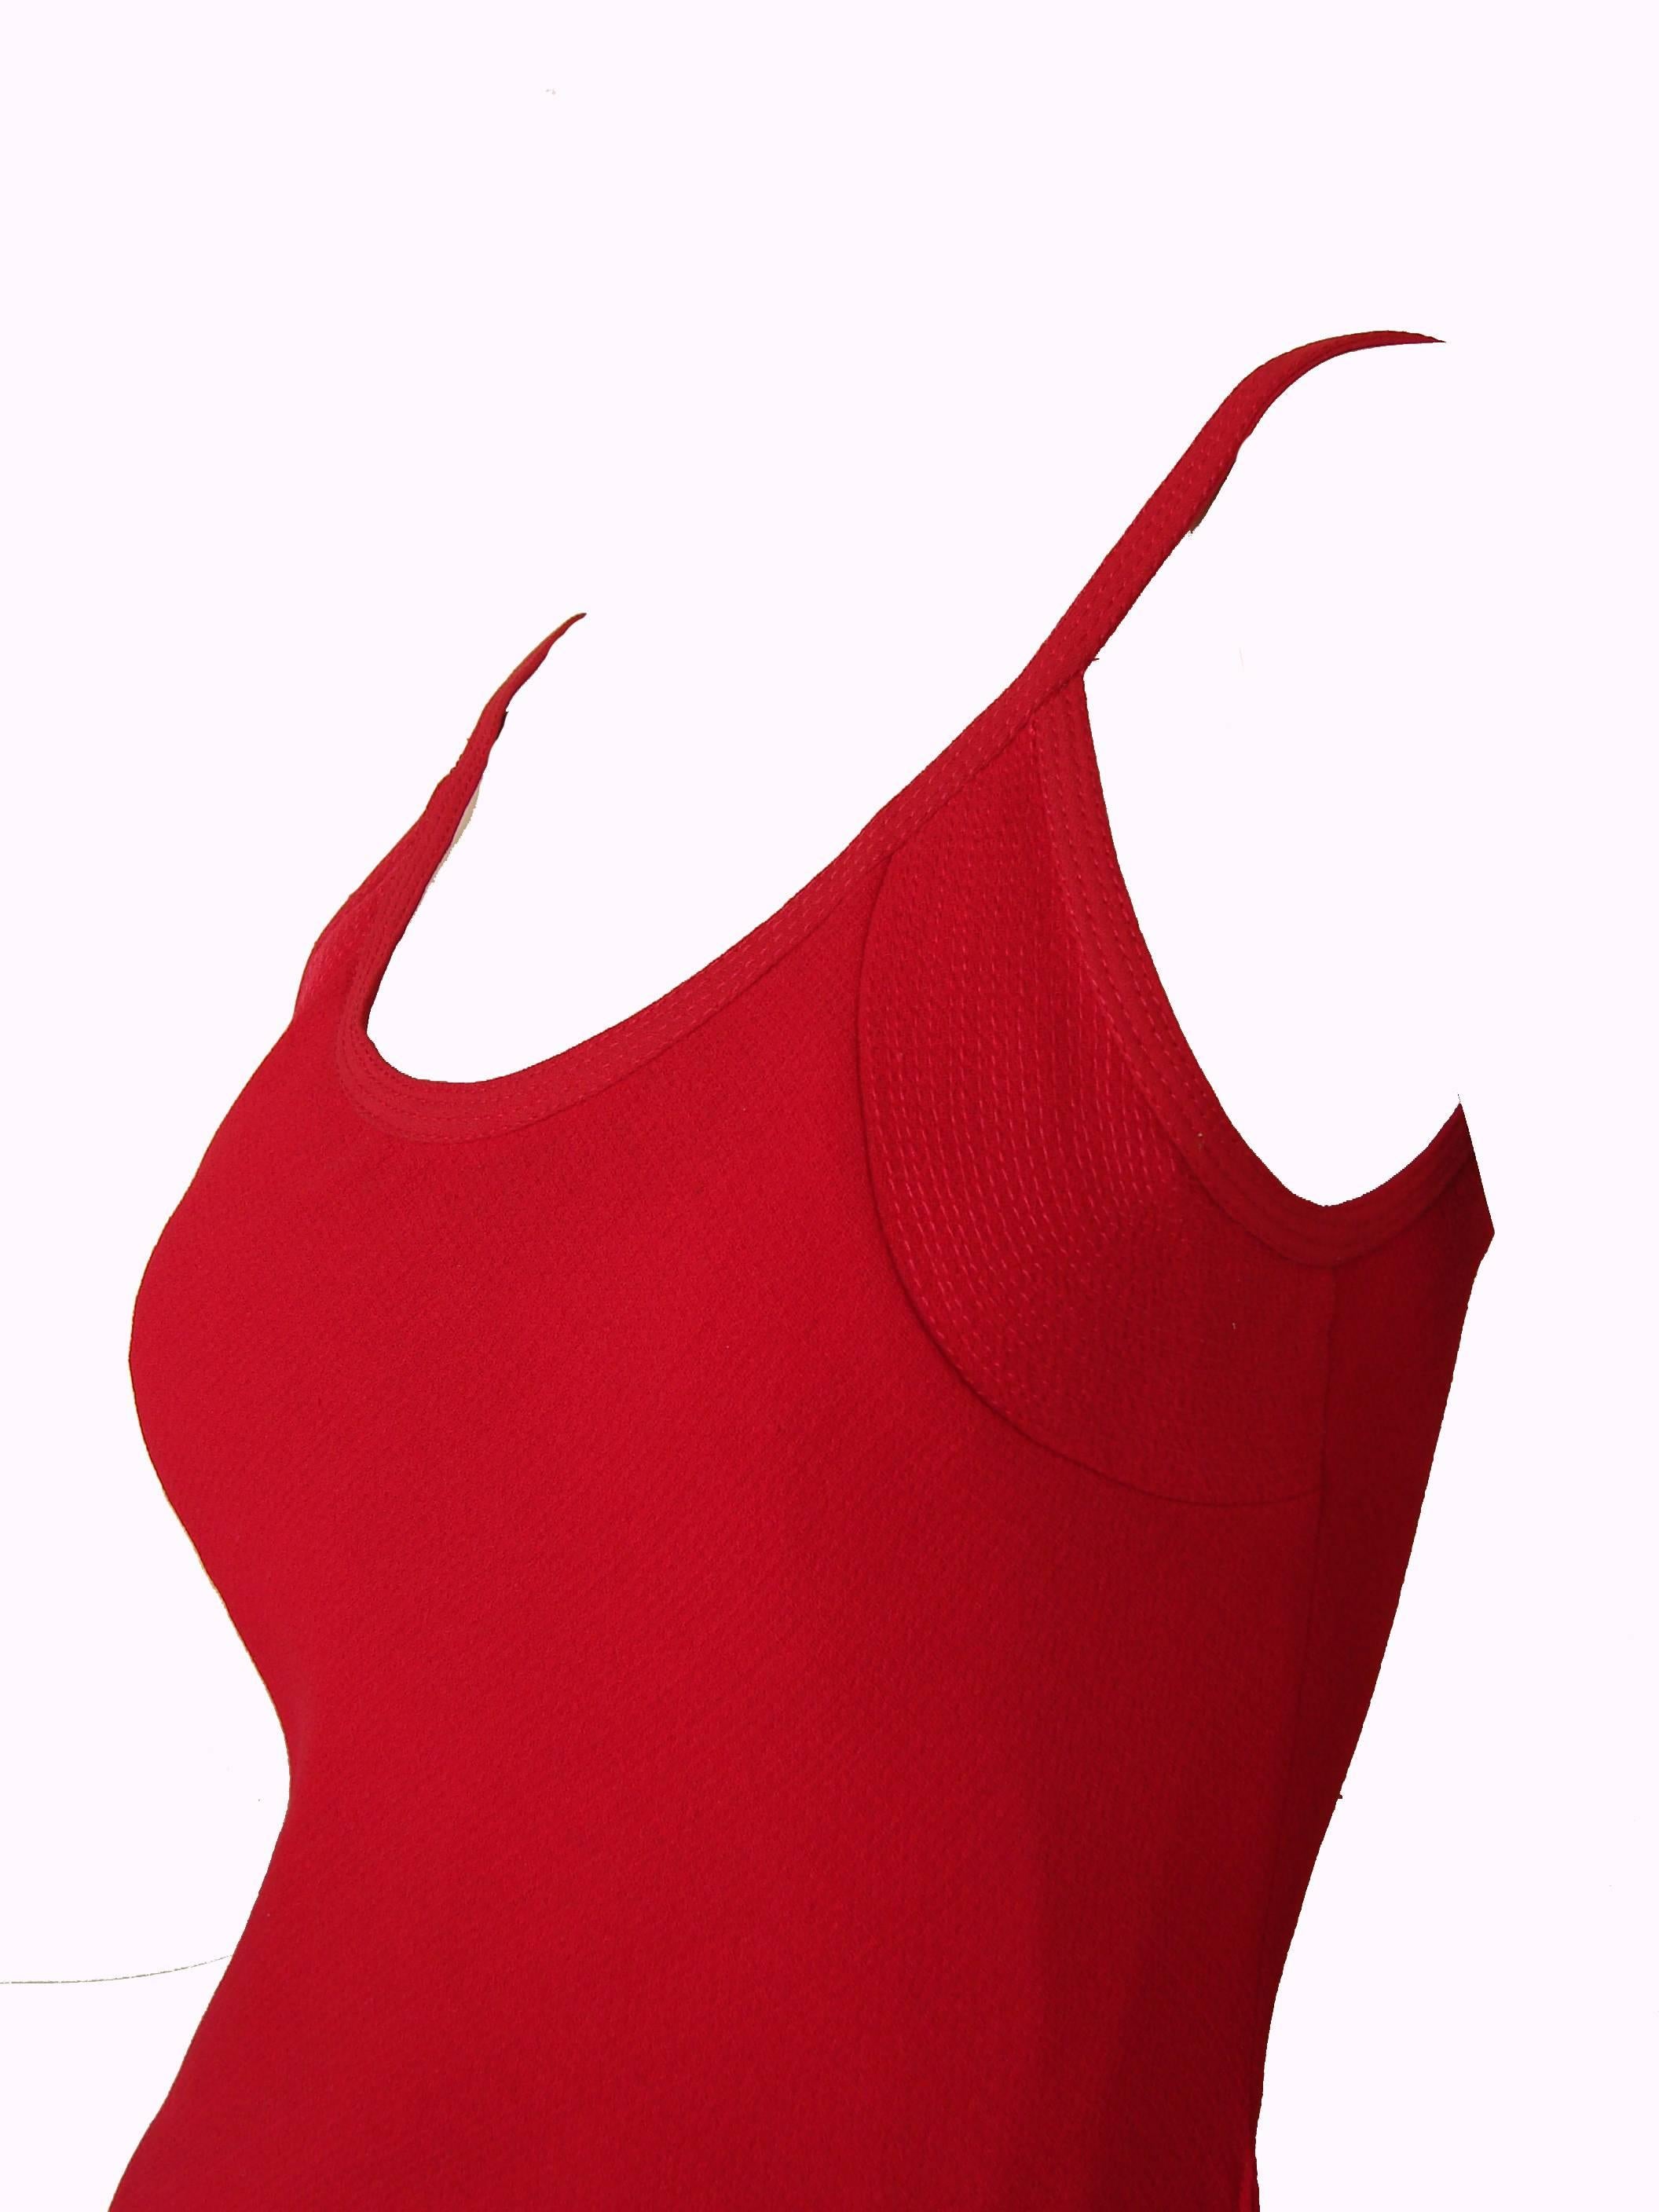 Gianni Versace Couture Red Bustier Dress Long Asymmetric Hem 1990s Sz S/M 1